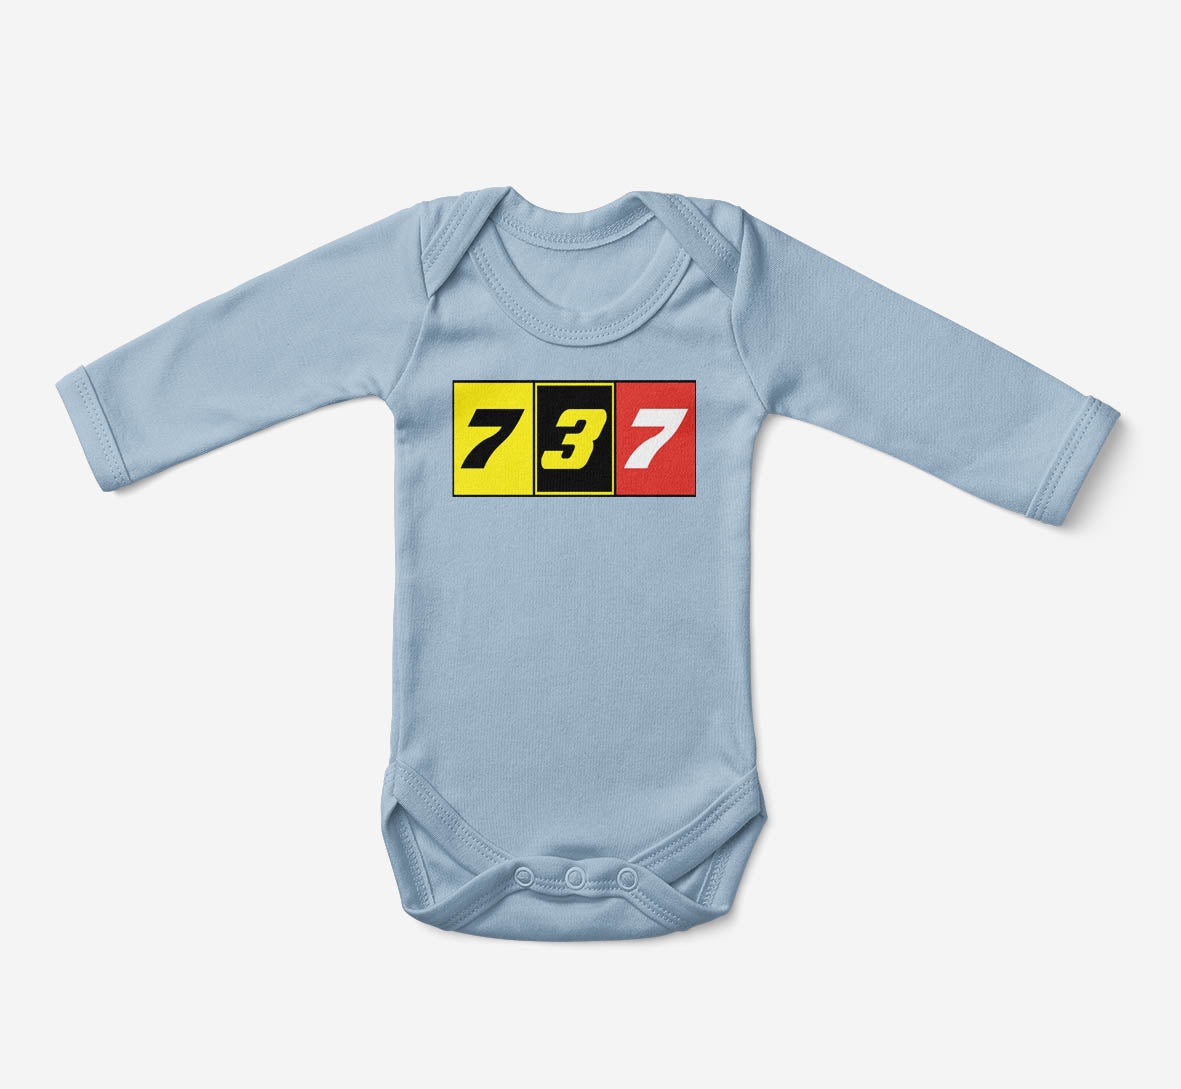 Flat Colourful 737 Designed Baby Bodysuits